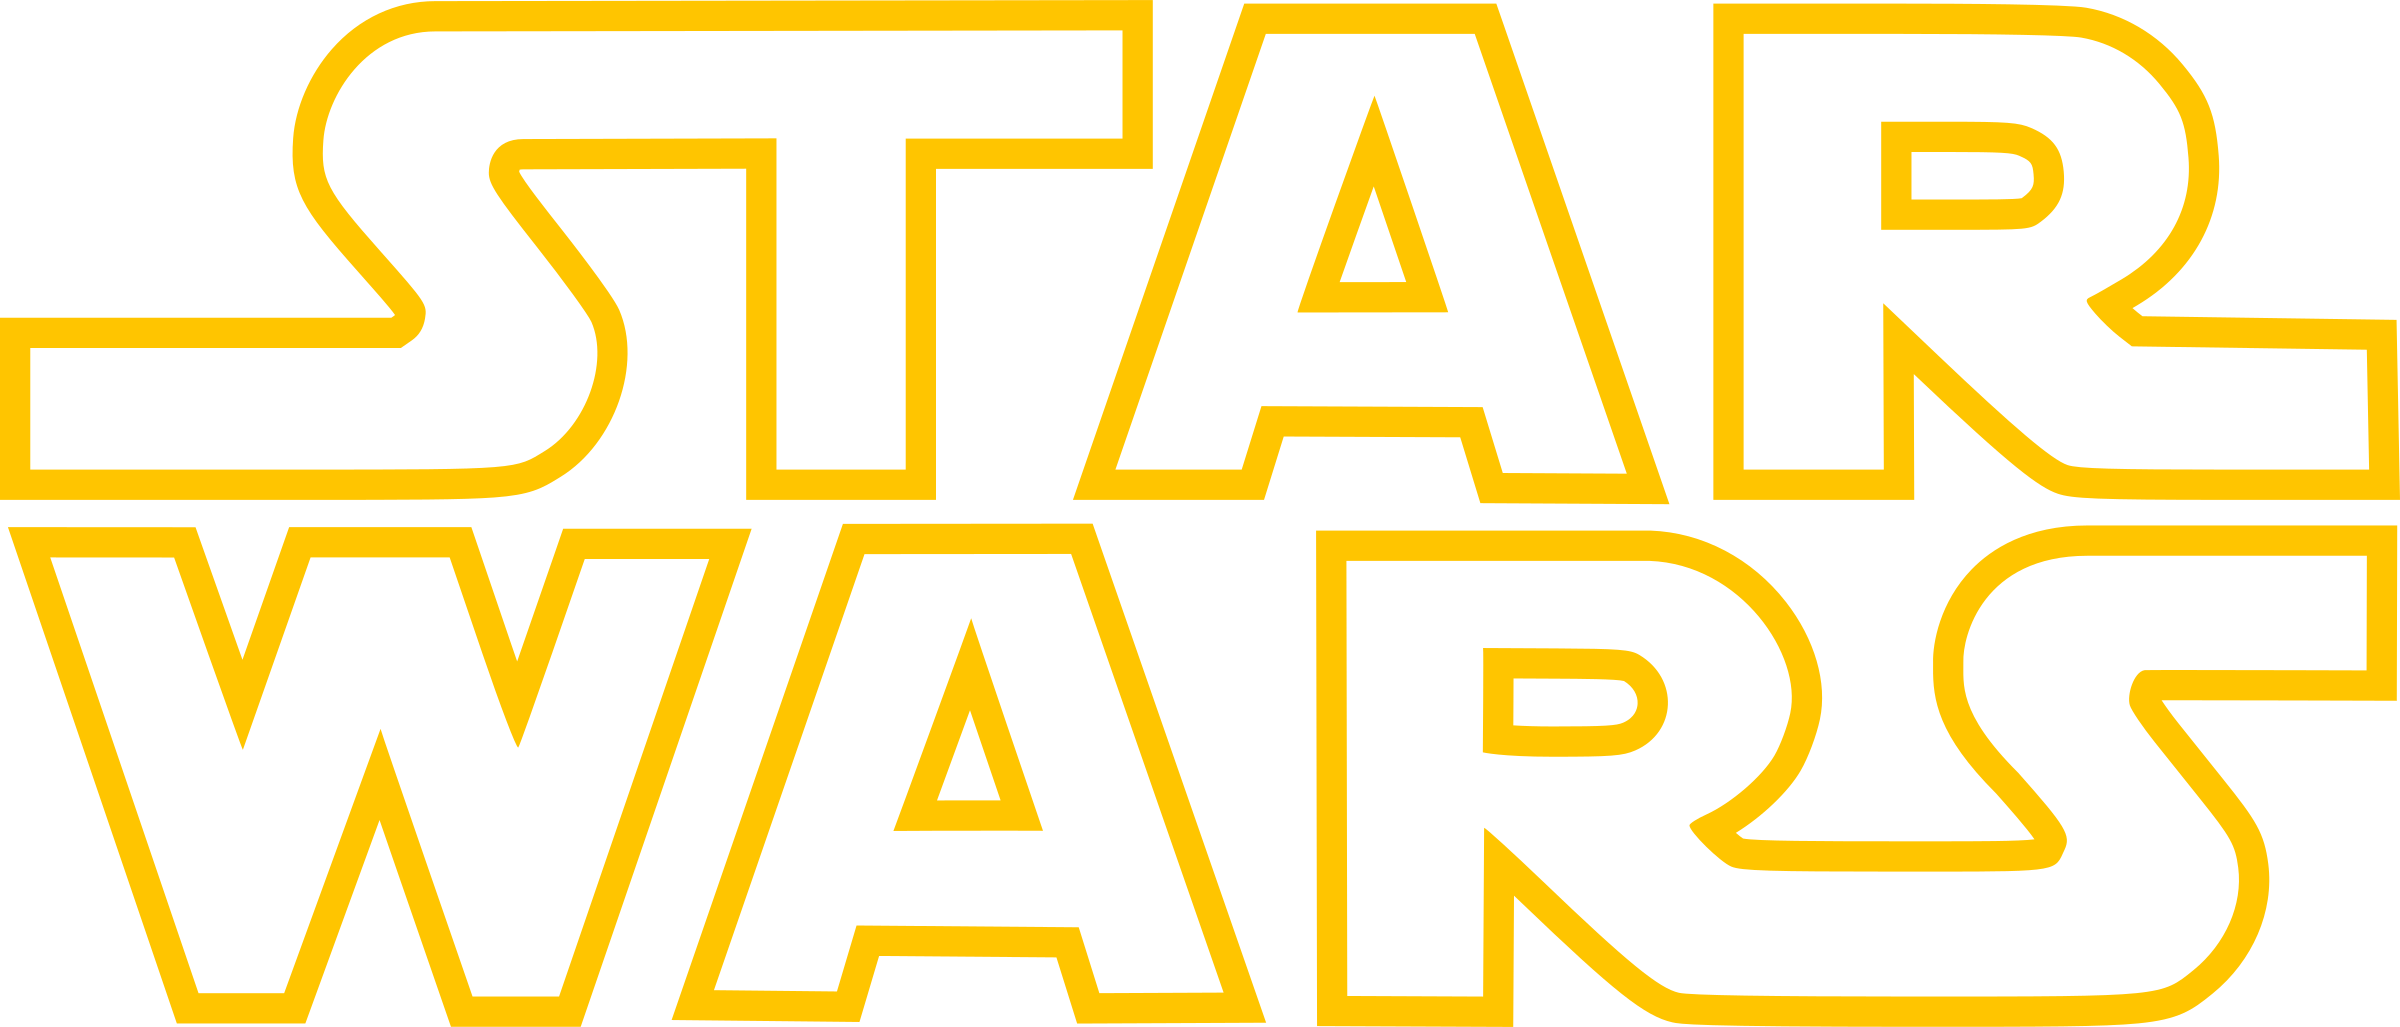 Star Wars Logo PNG High-Quality Image